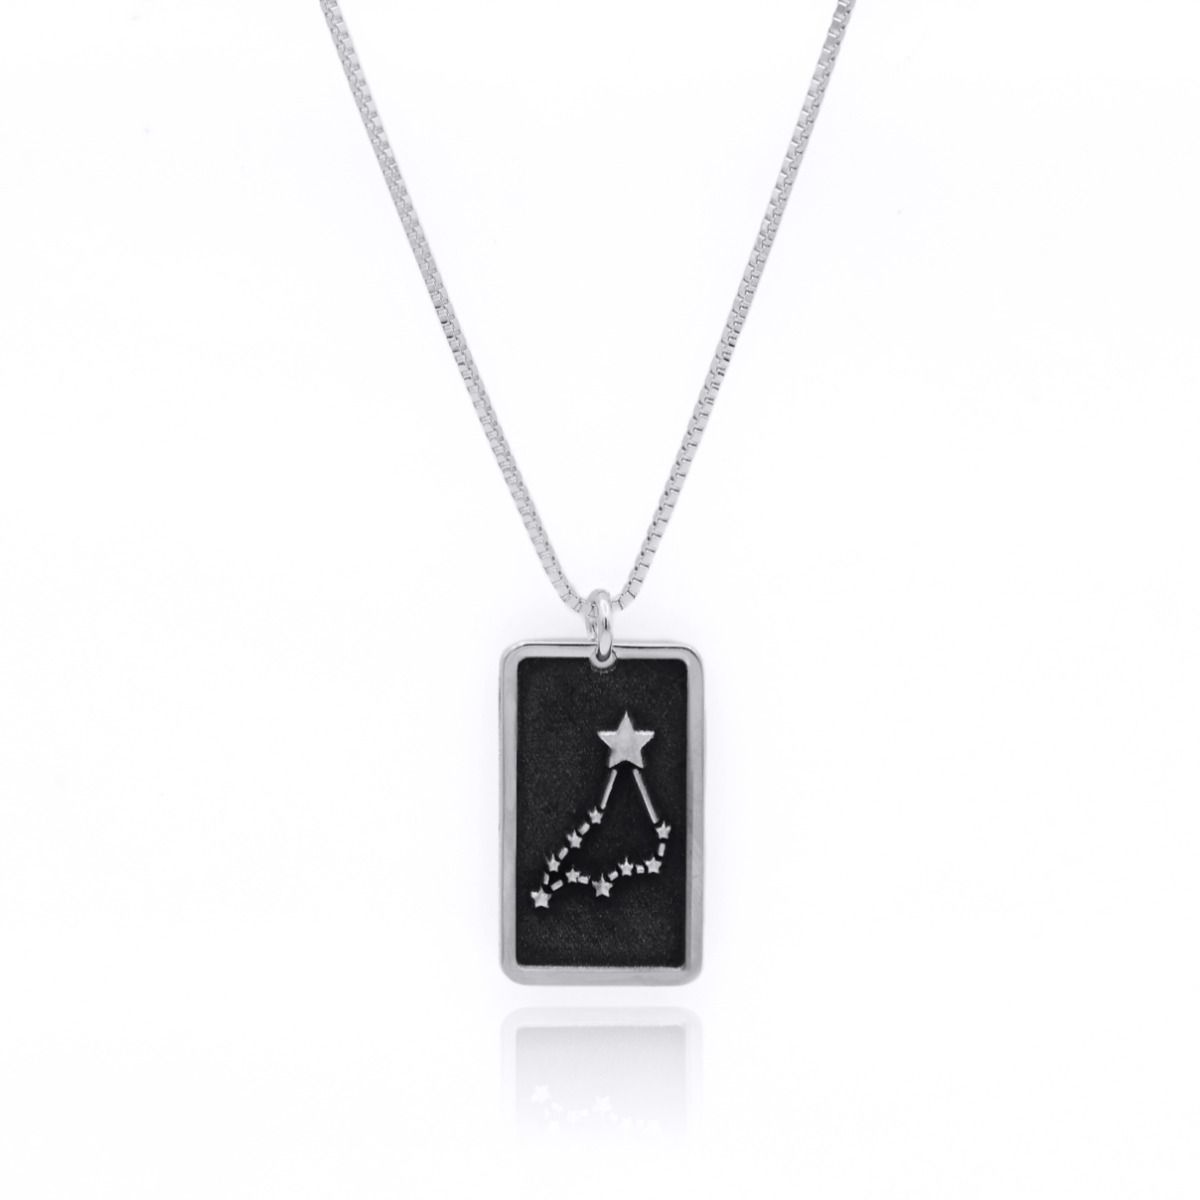 Buy Silver-Toned Necklaces & Pendants for Women by POPLINS Online | Ajio.com